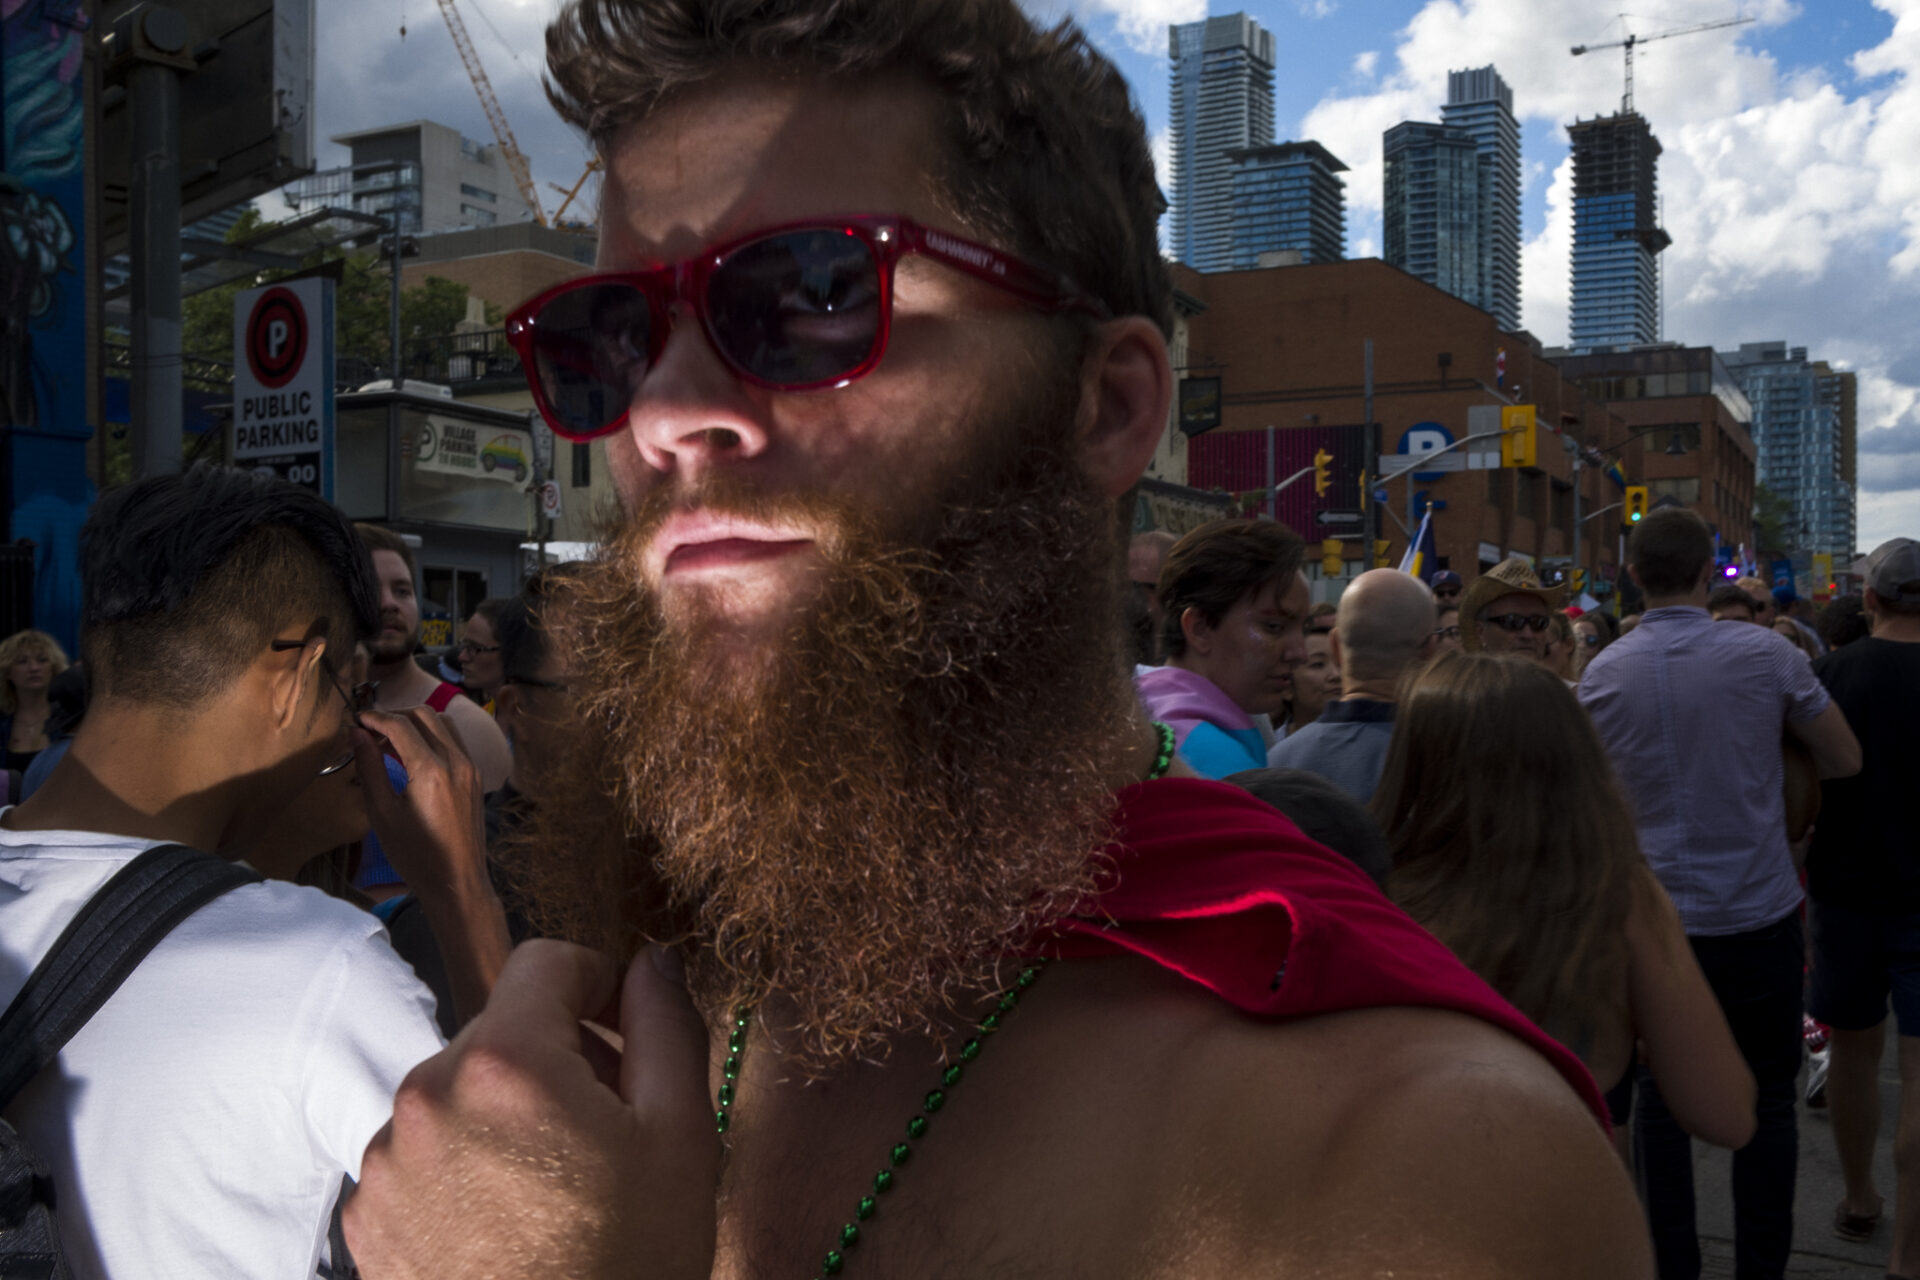 flash street photography gay pride - off camera flash